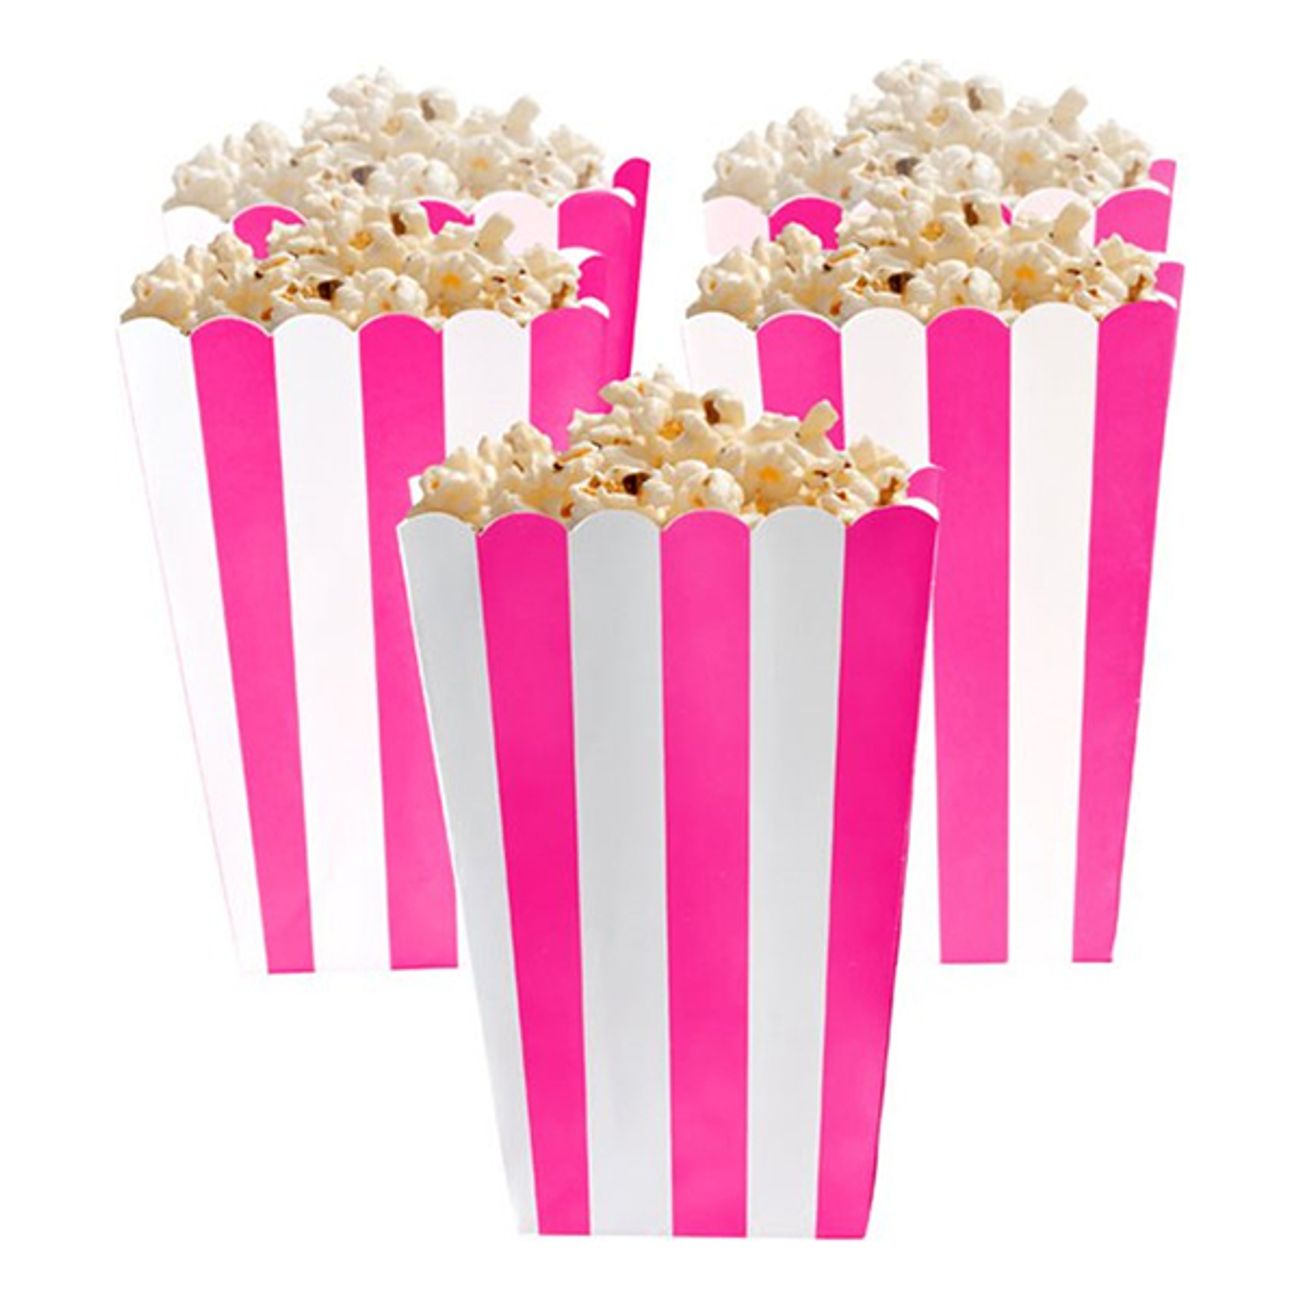 popcornbagare-neonrosa-randiga-1